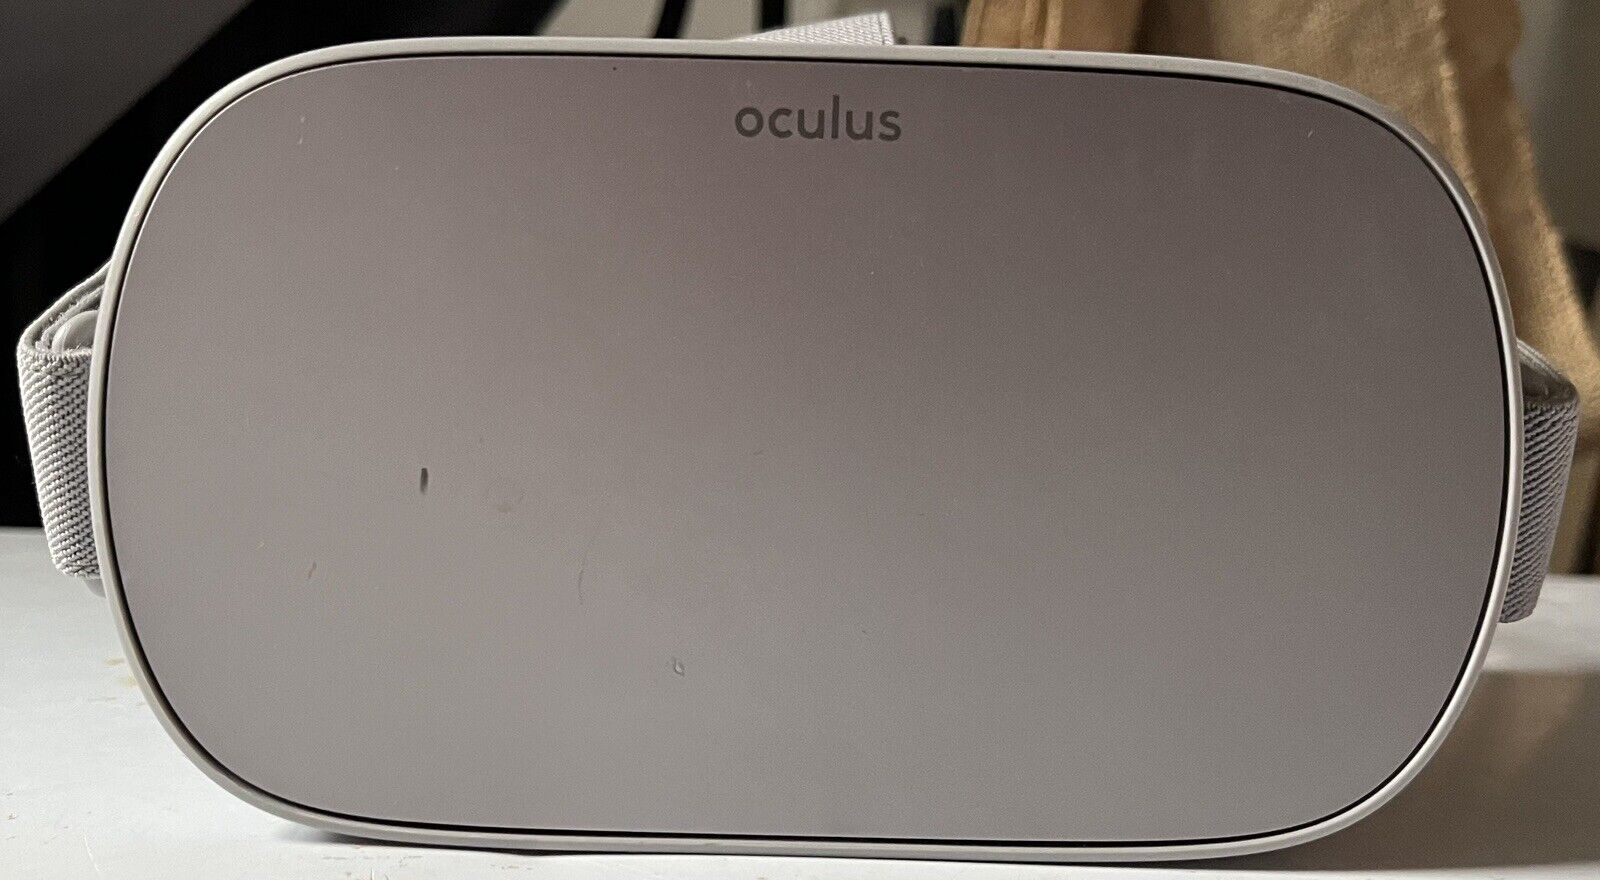 Meta Oculus Go 64GB Standalone Virtual Reality Headset - Gray for 